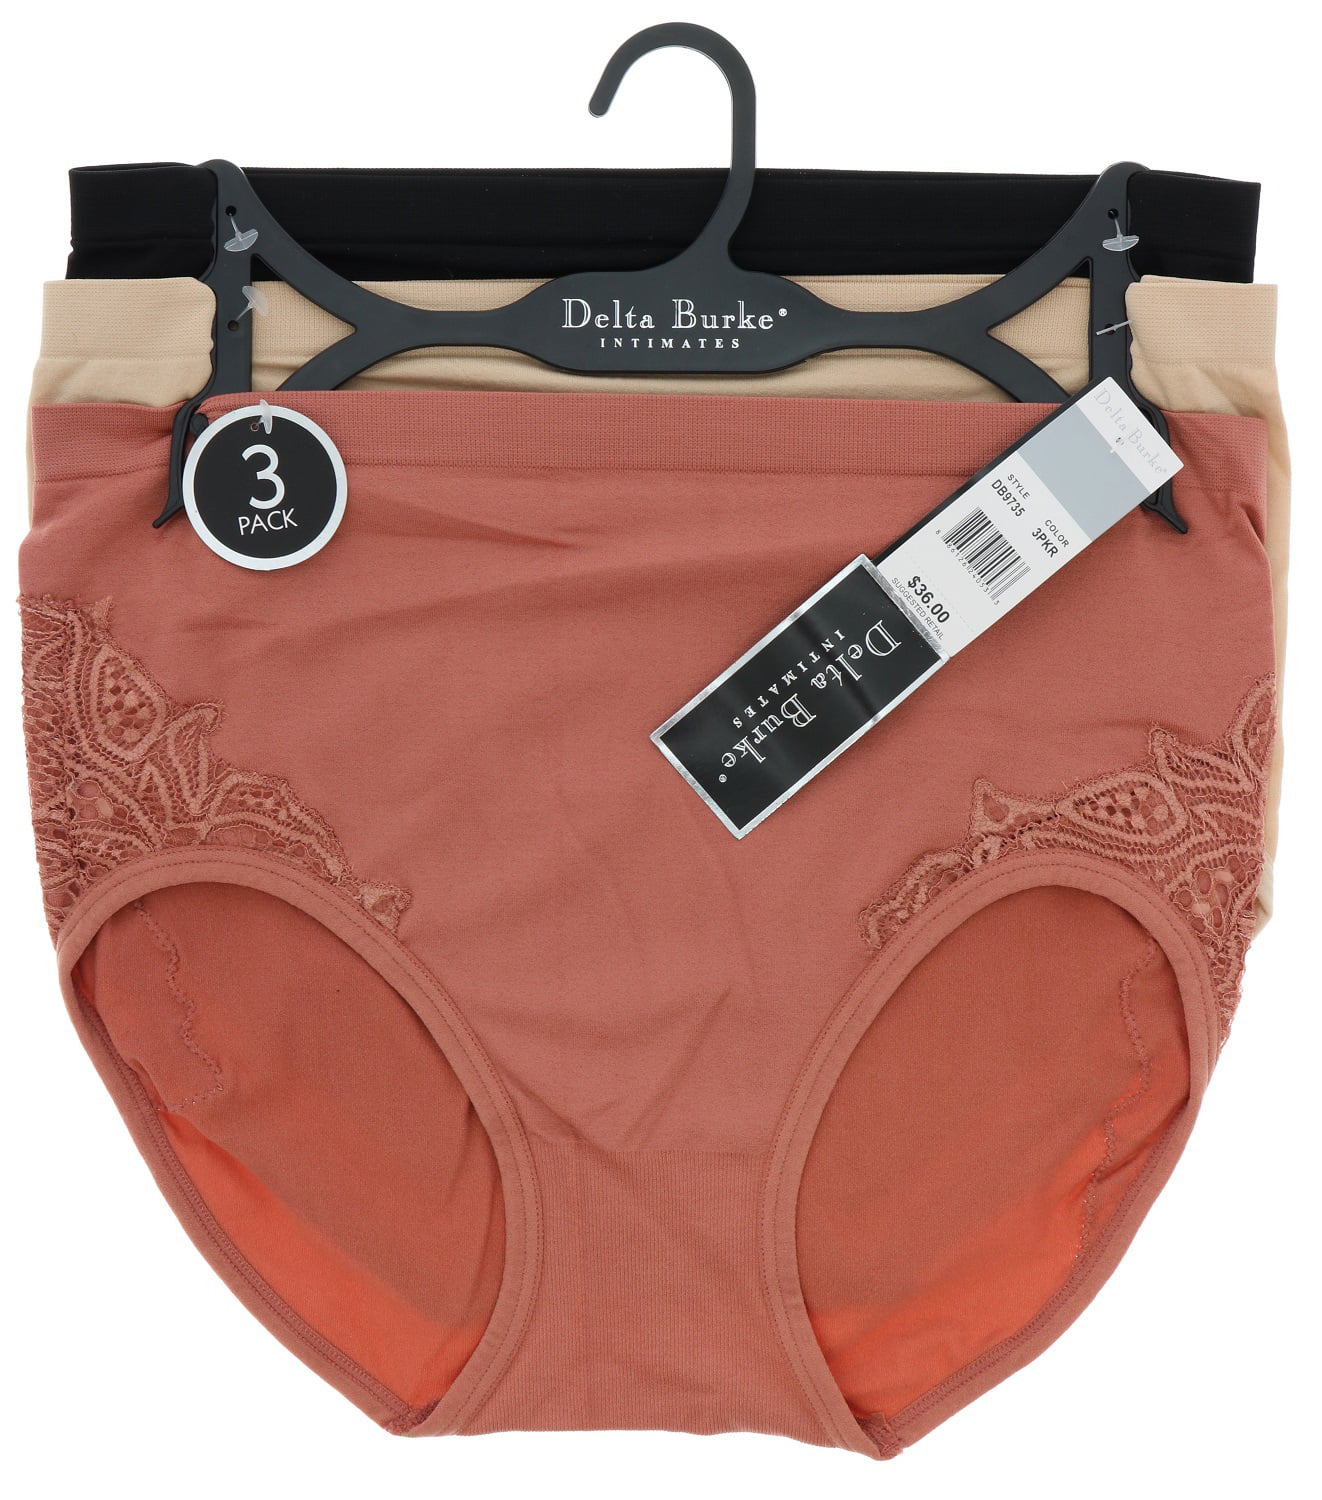 Delta Burke 2 pack seamless wide strap lace bra set plus size 2X orange black 